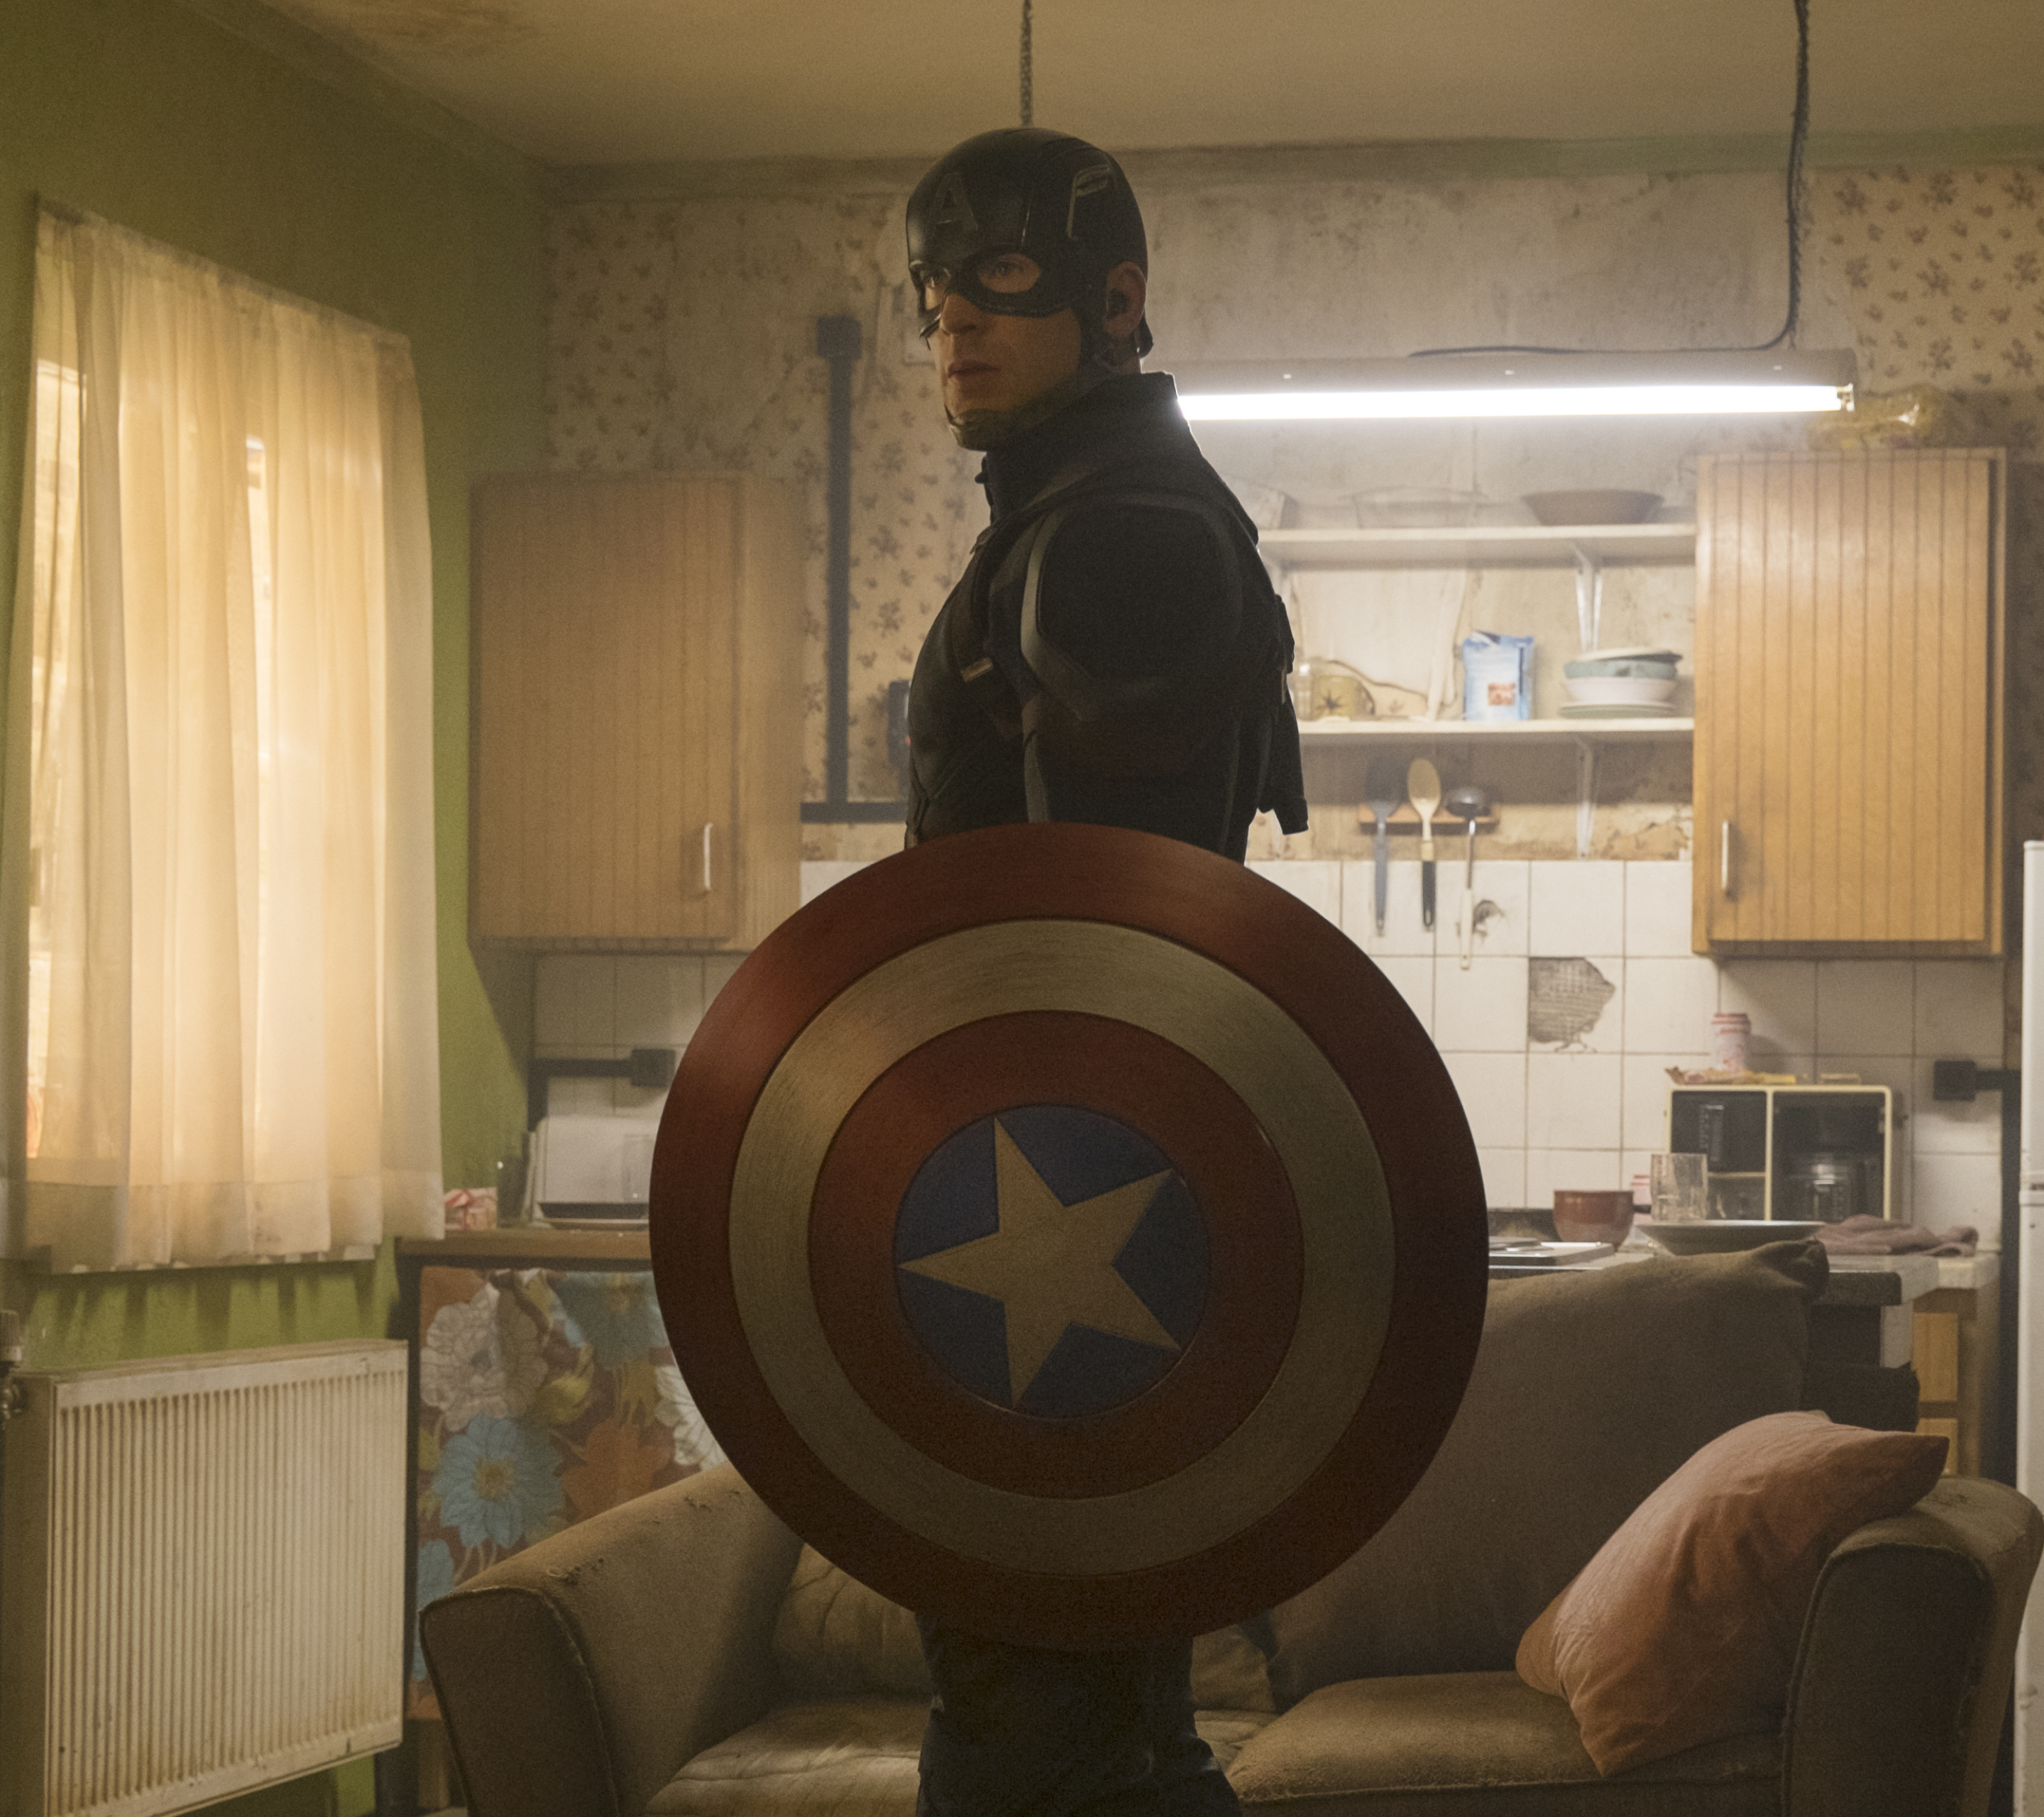 Handy-Wallpaper Captain America, Filme, Kapitän Amerika, The First Avenger: Civil War kostenlos herunterladen.